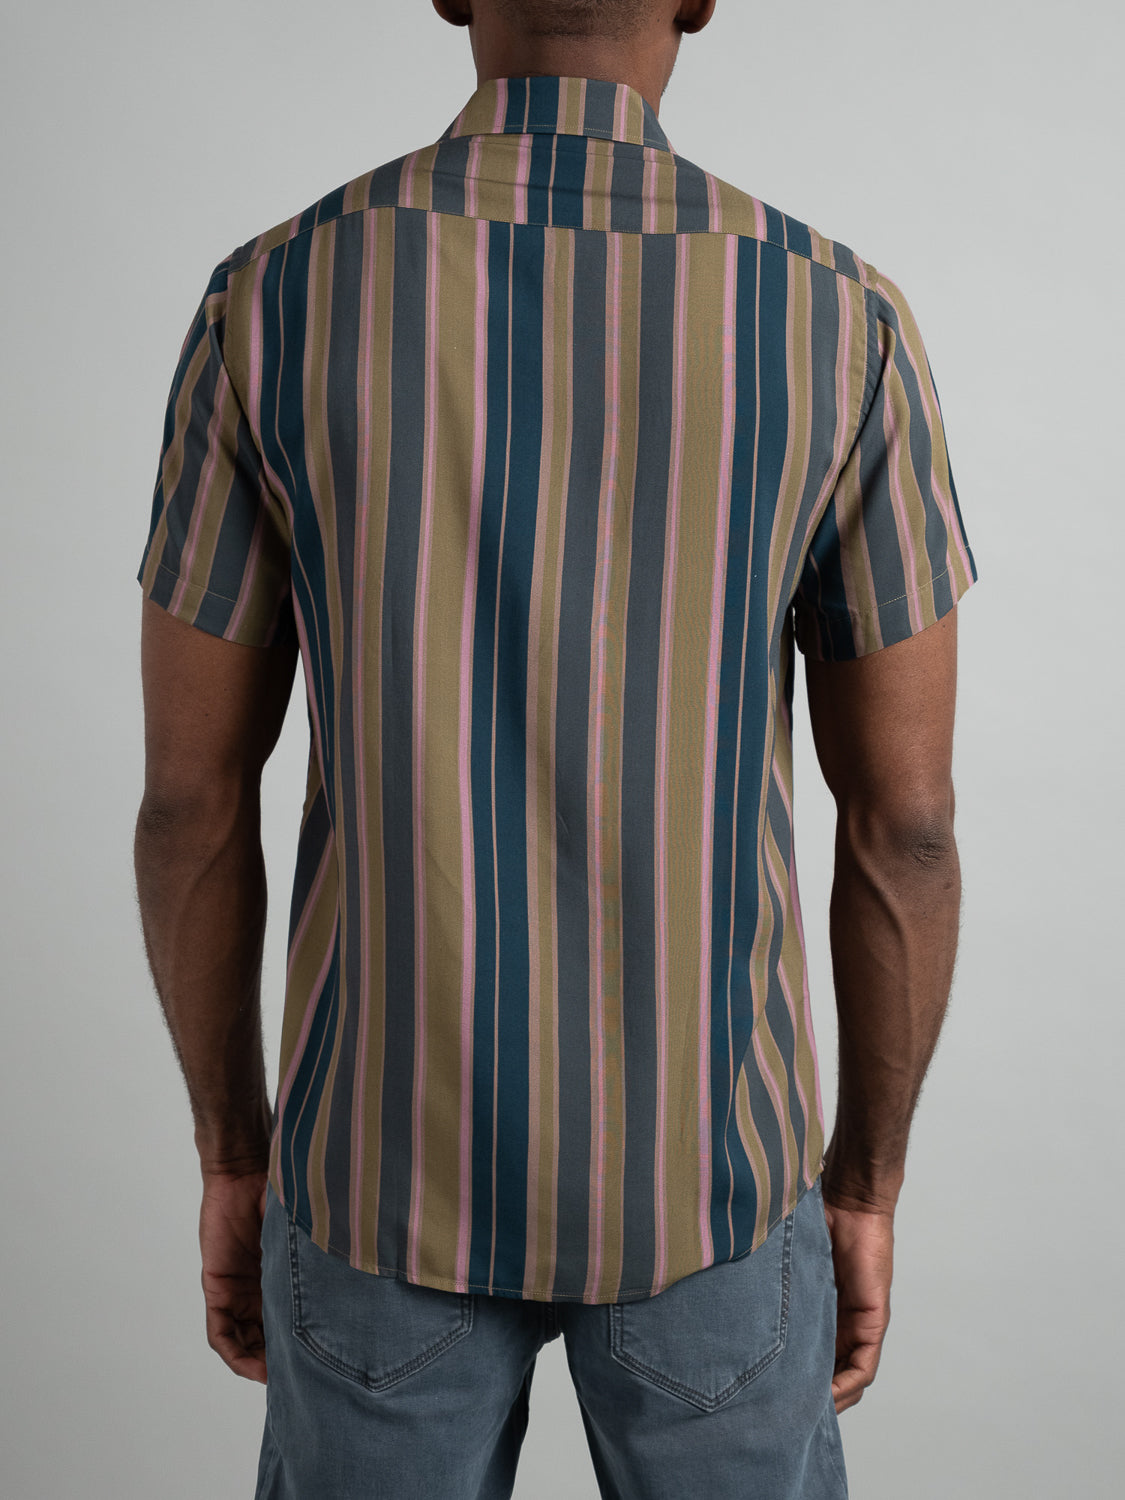 Ace Short Sleeve Rayon Printed Stripe Shirt